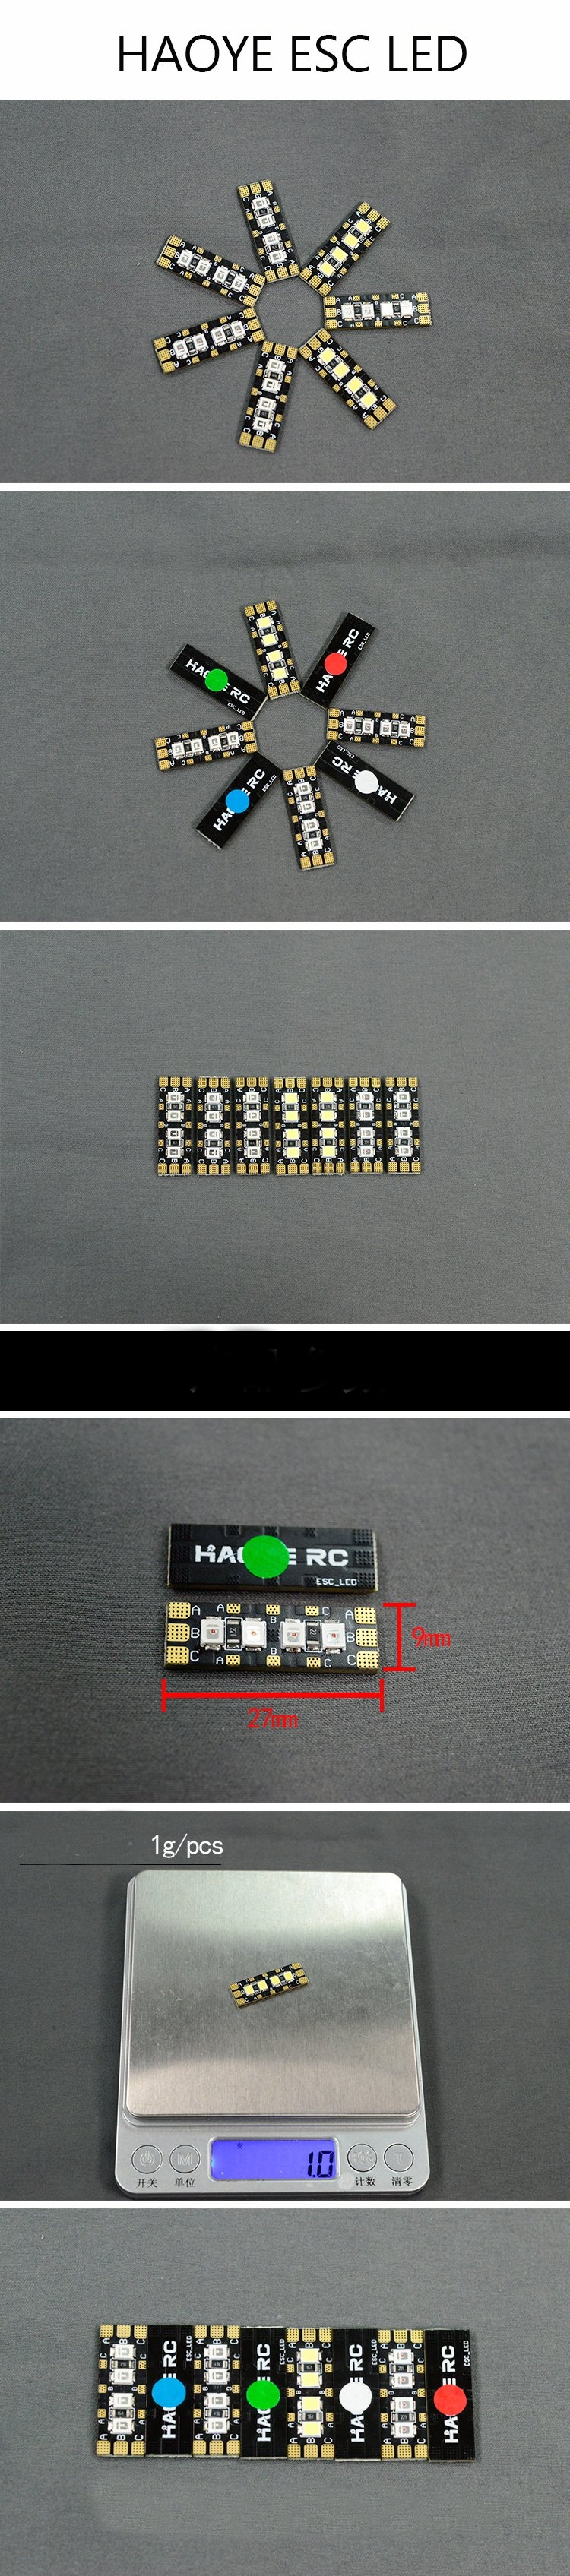 2pcs/Bag HAOYE 6S ESC LED Arm Light 27*9*3.5mm for ESC Extension Cable PCB Board FPV Racing Multirotors